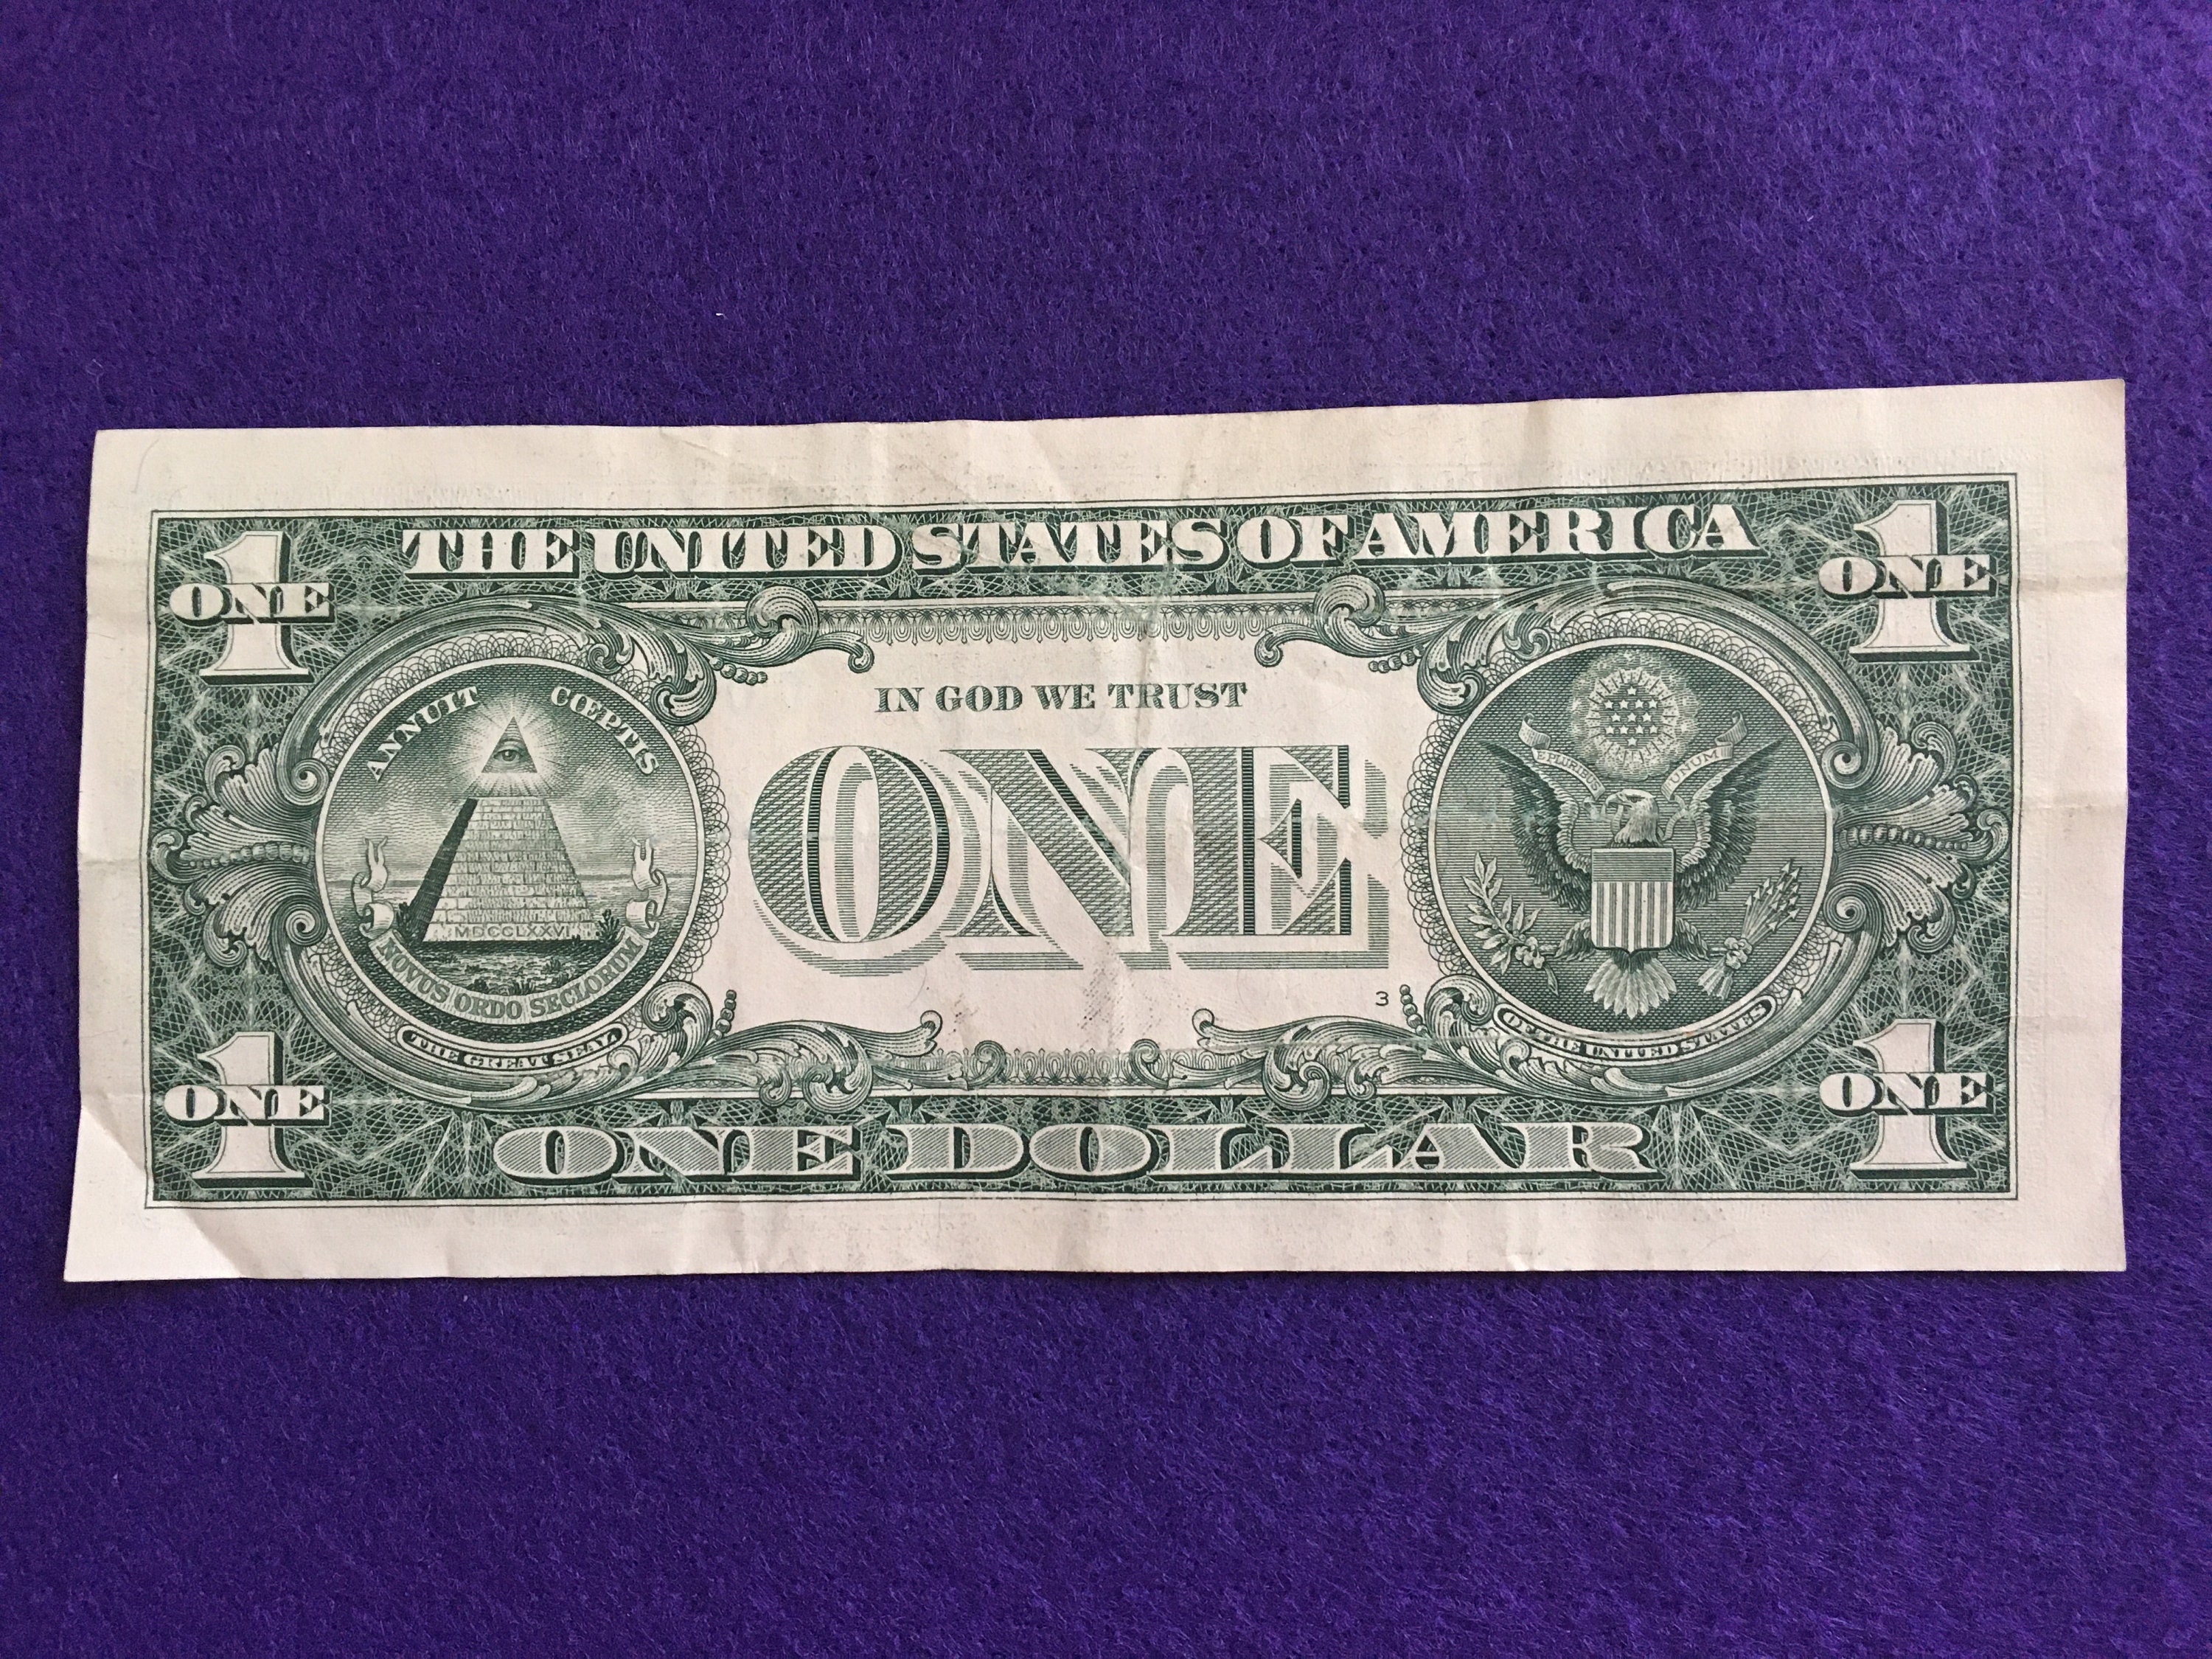 2017 Star One Dollar Bill Etsy